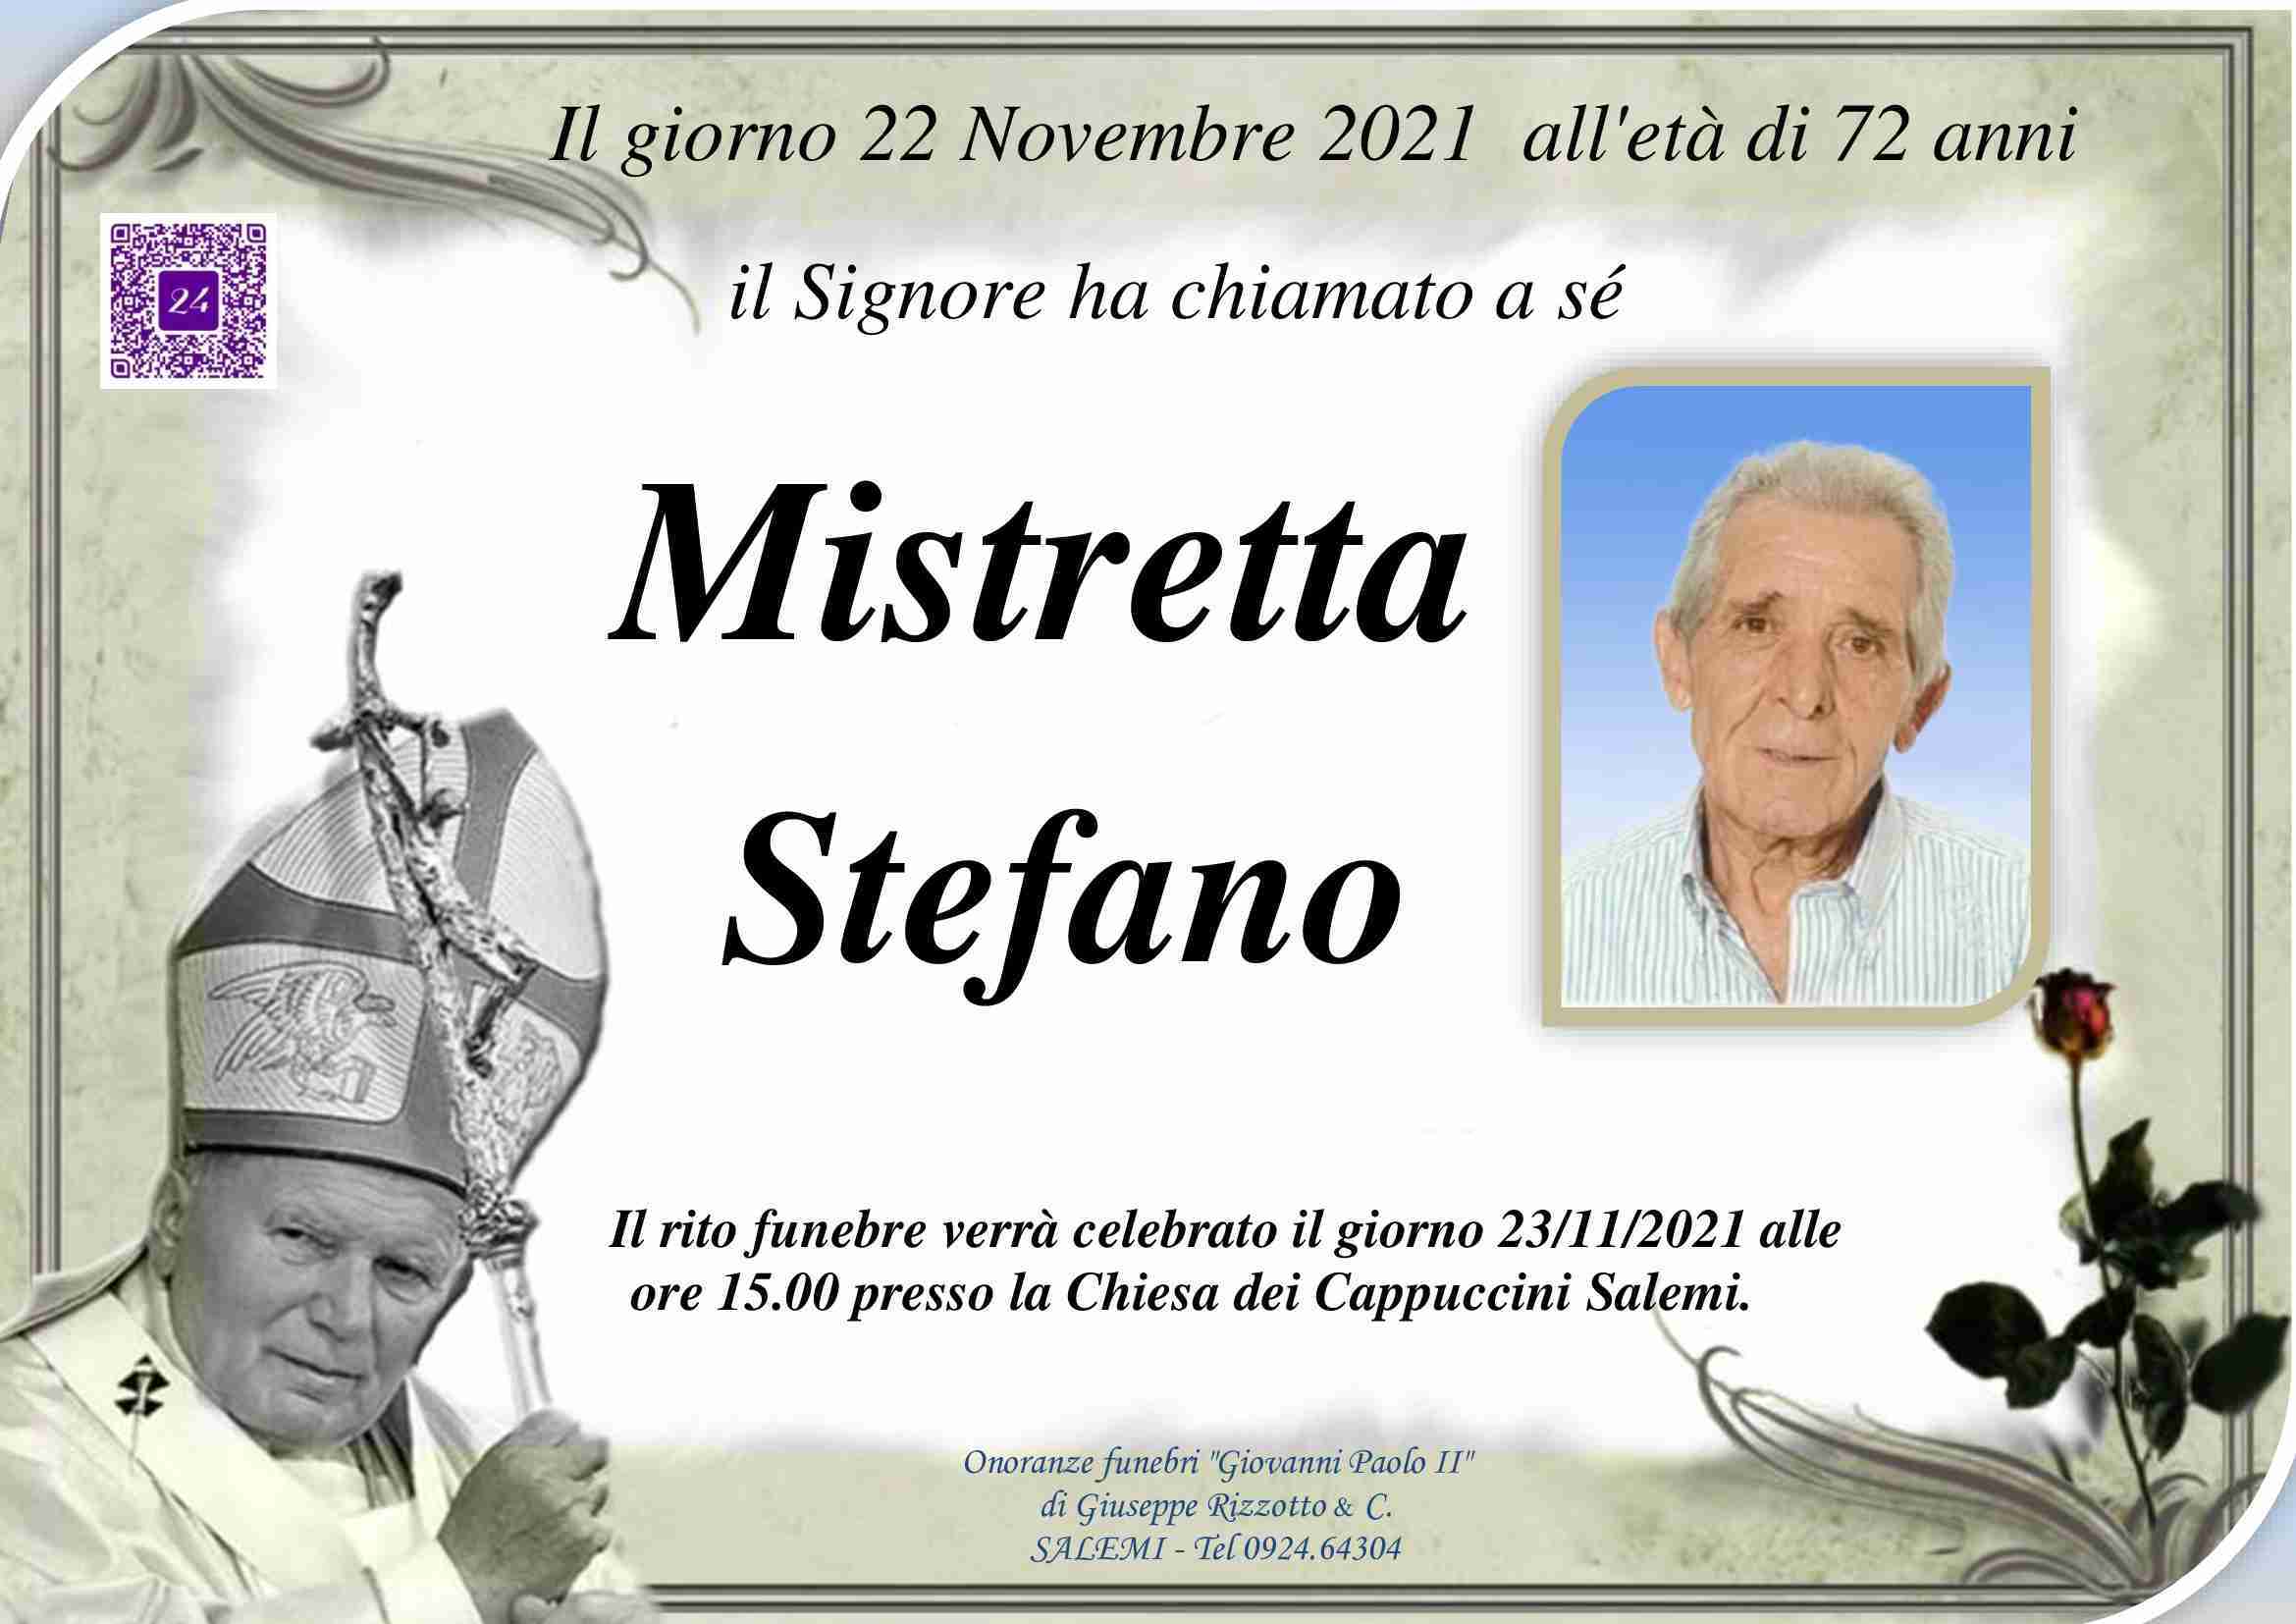 Stefano Mistretta